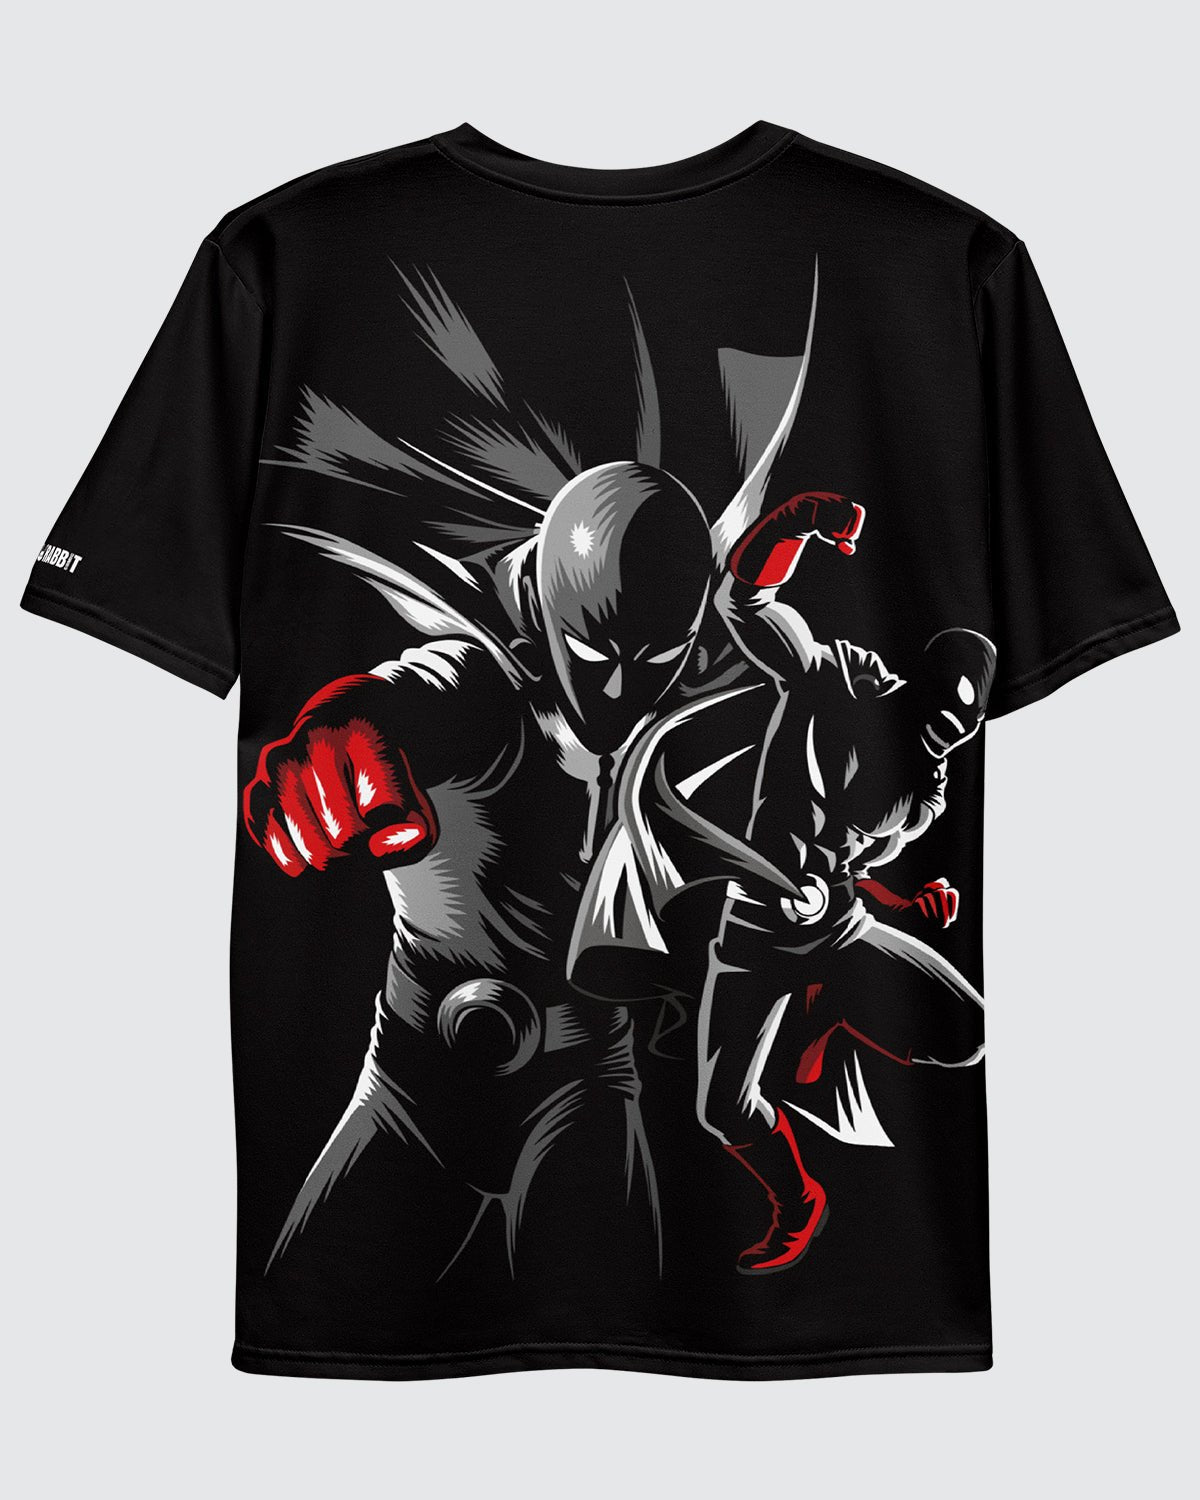 Saitama Punch T-shirt • One Punch Man